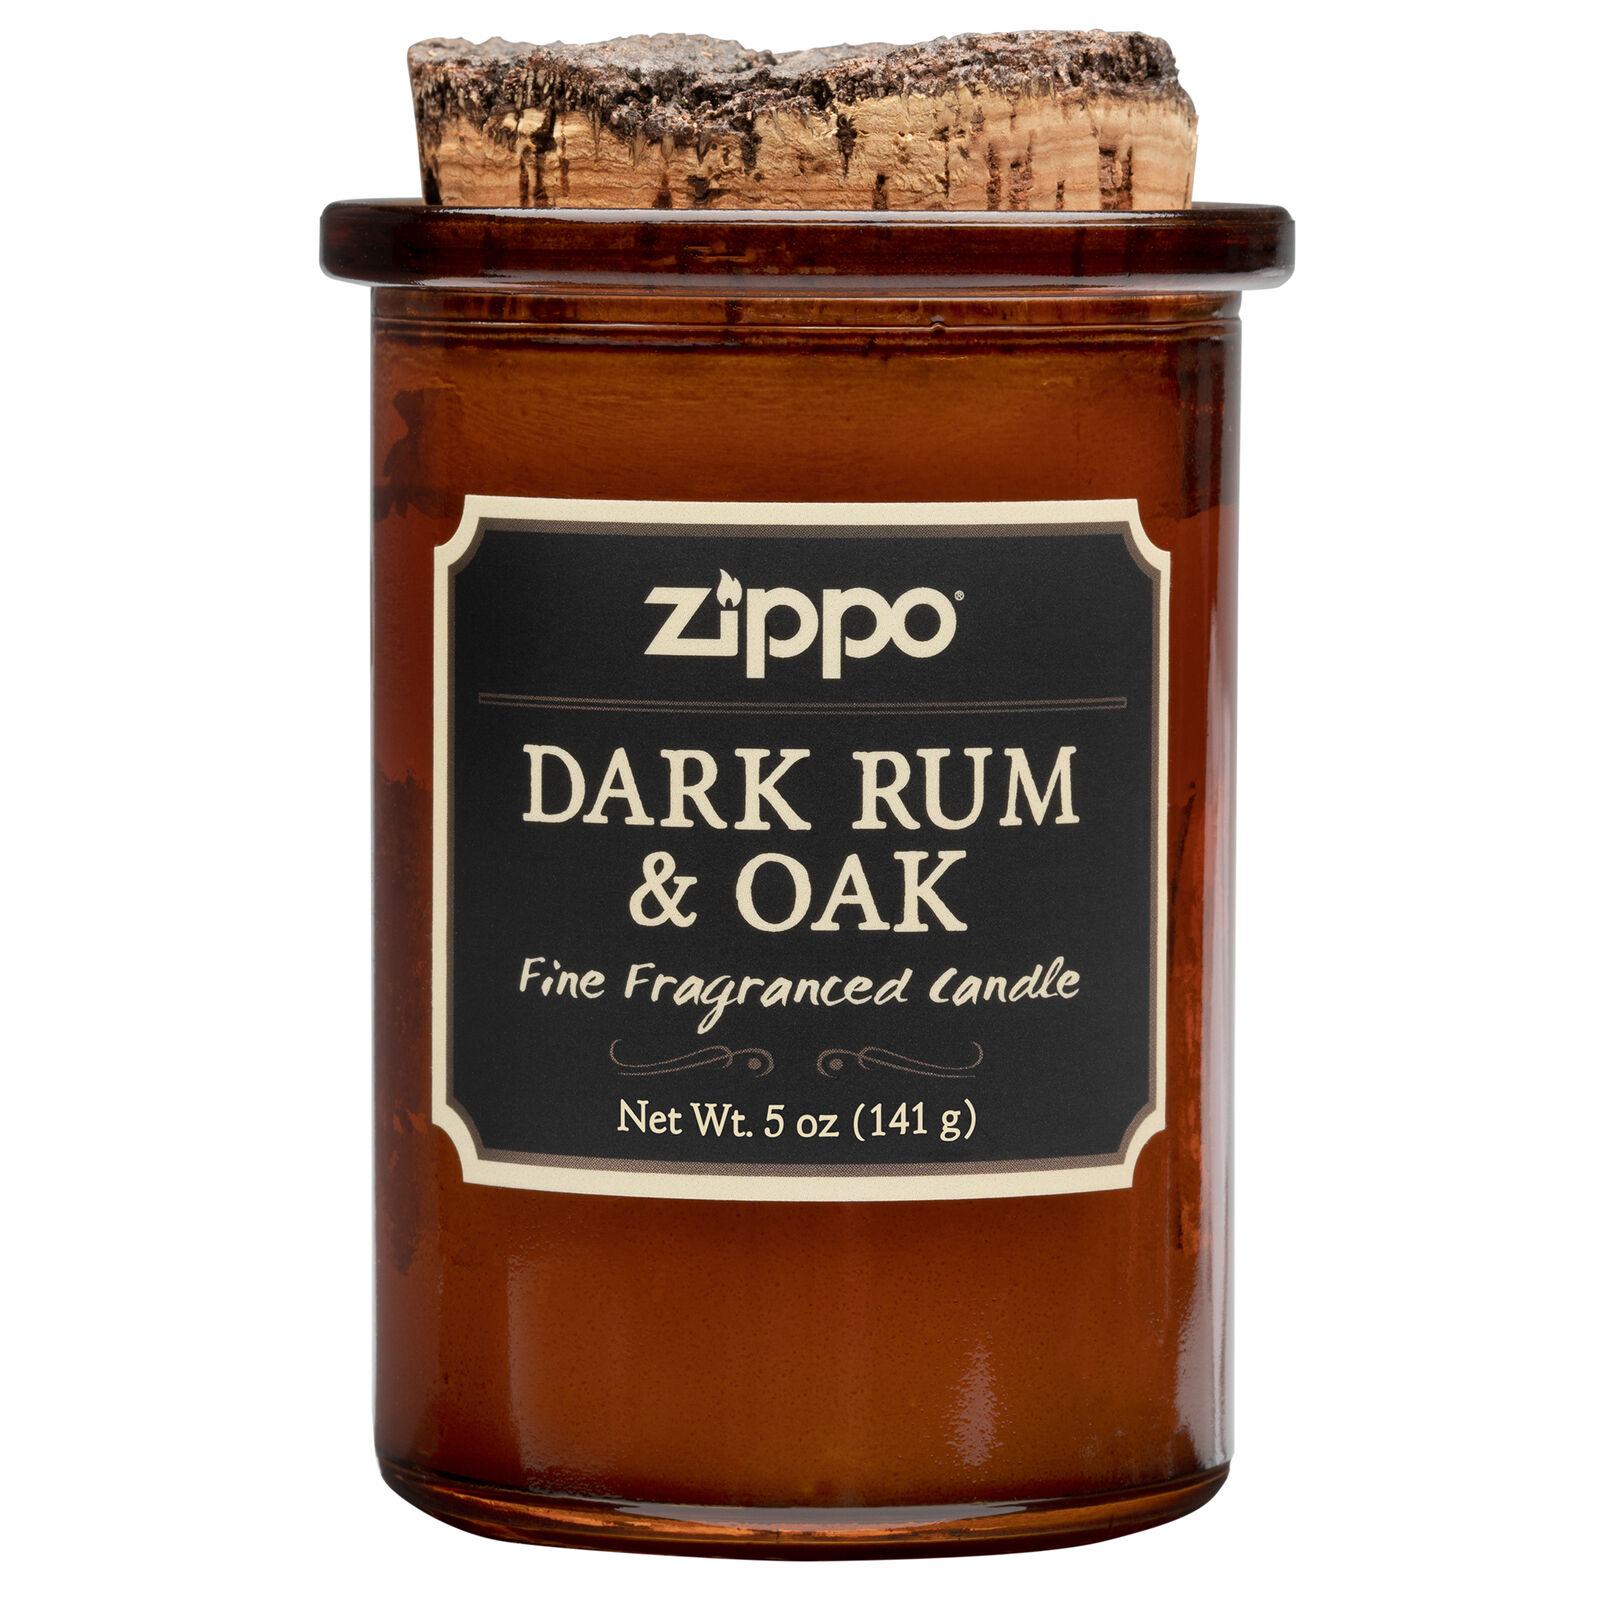 Zippo Spirit Candle - Dark Rum & Oak, 70007, New Condition (5 oz. jar)